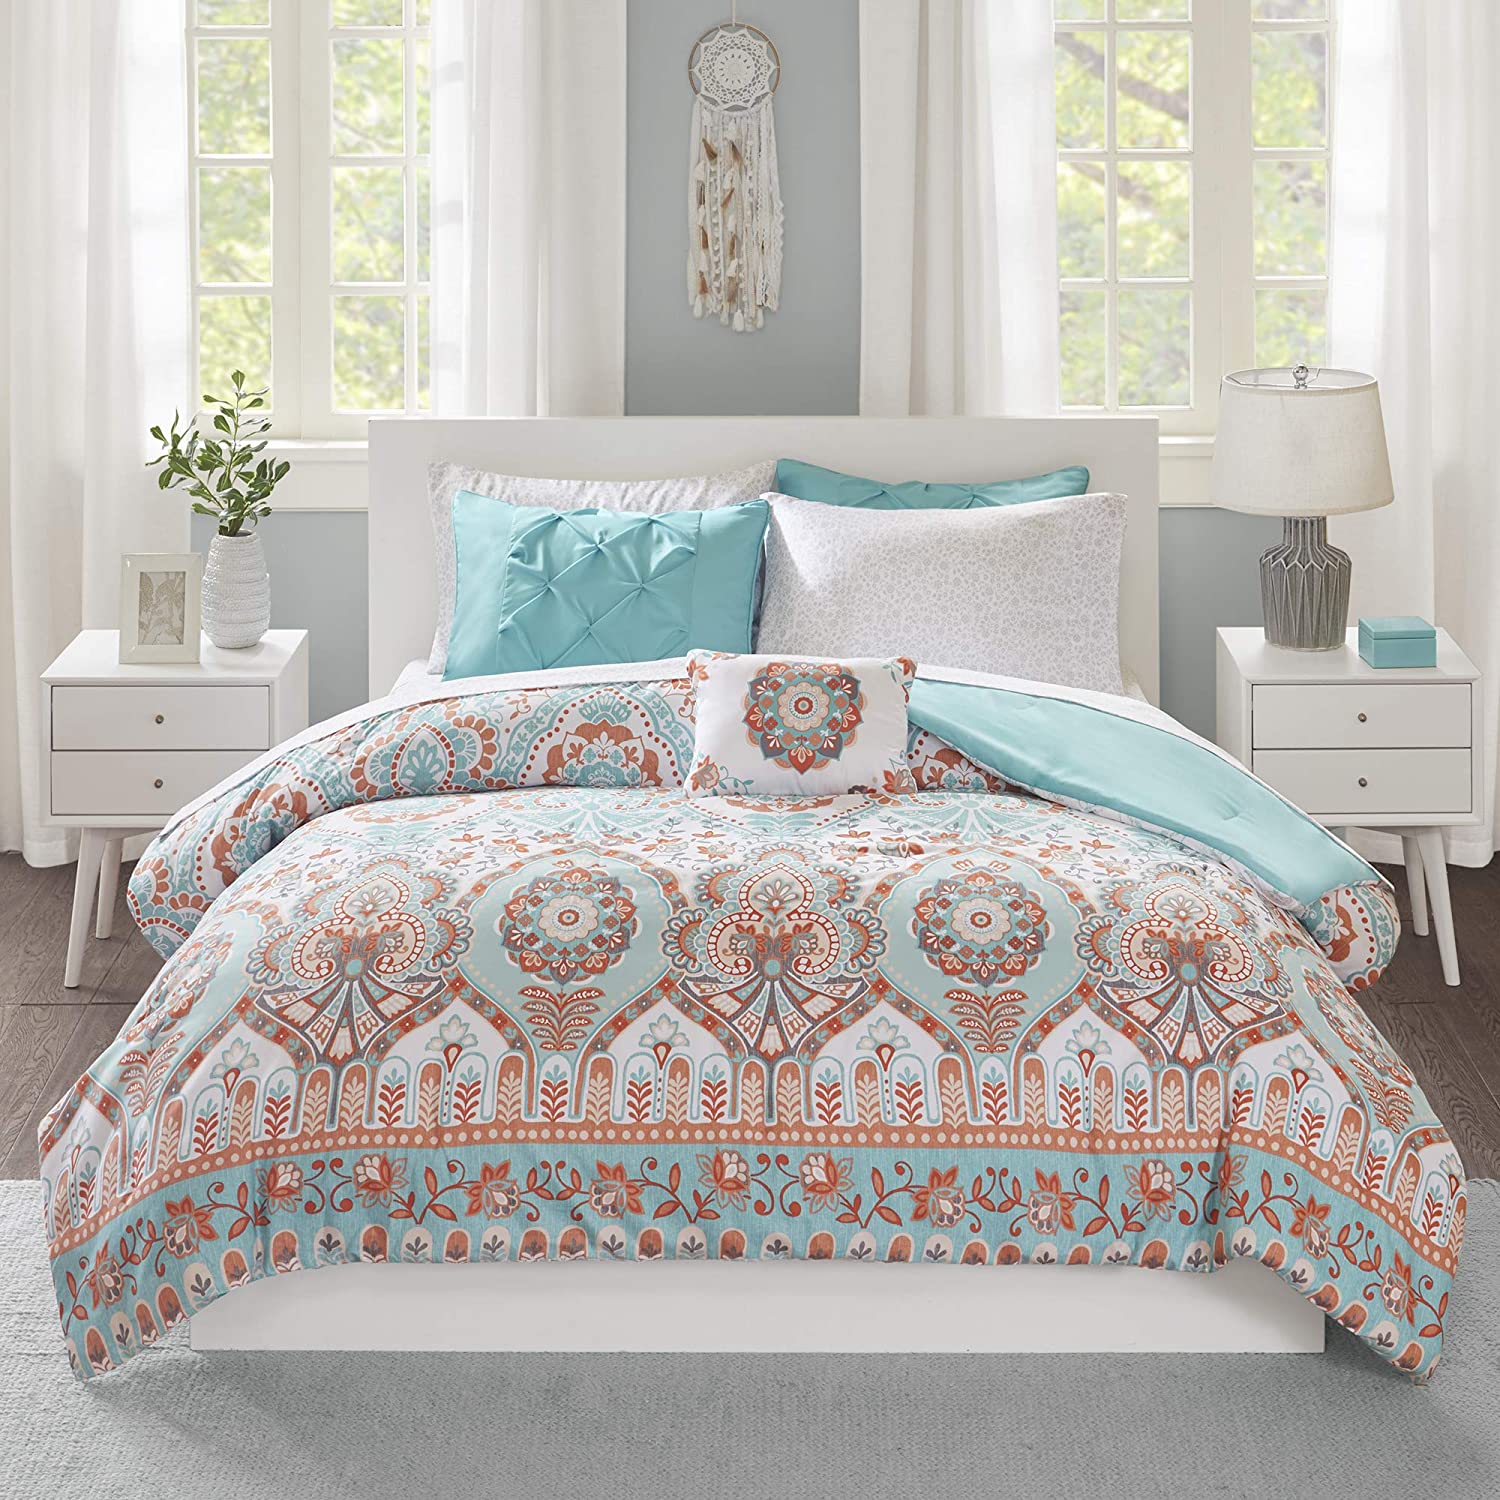 Intelligent Design Boho Non-Toxic Queen Comforter Set, 8-Piece